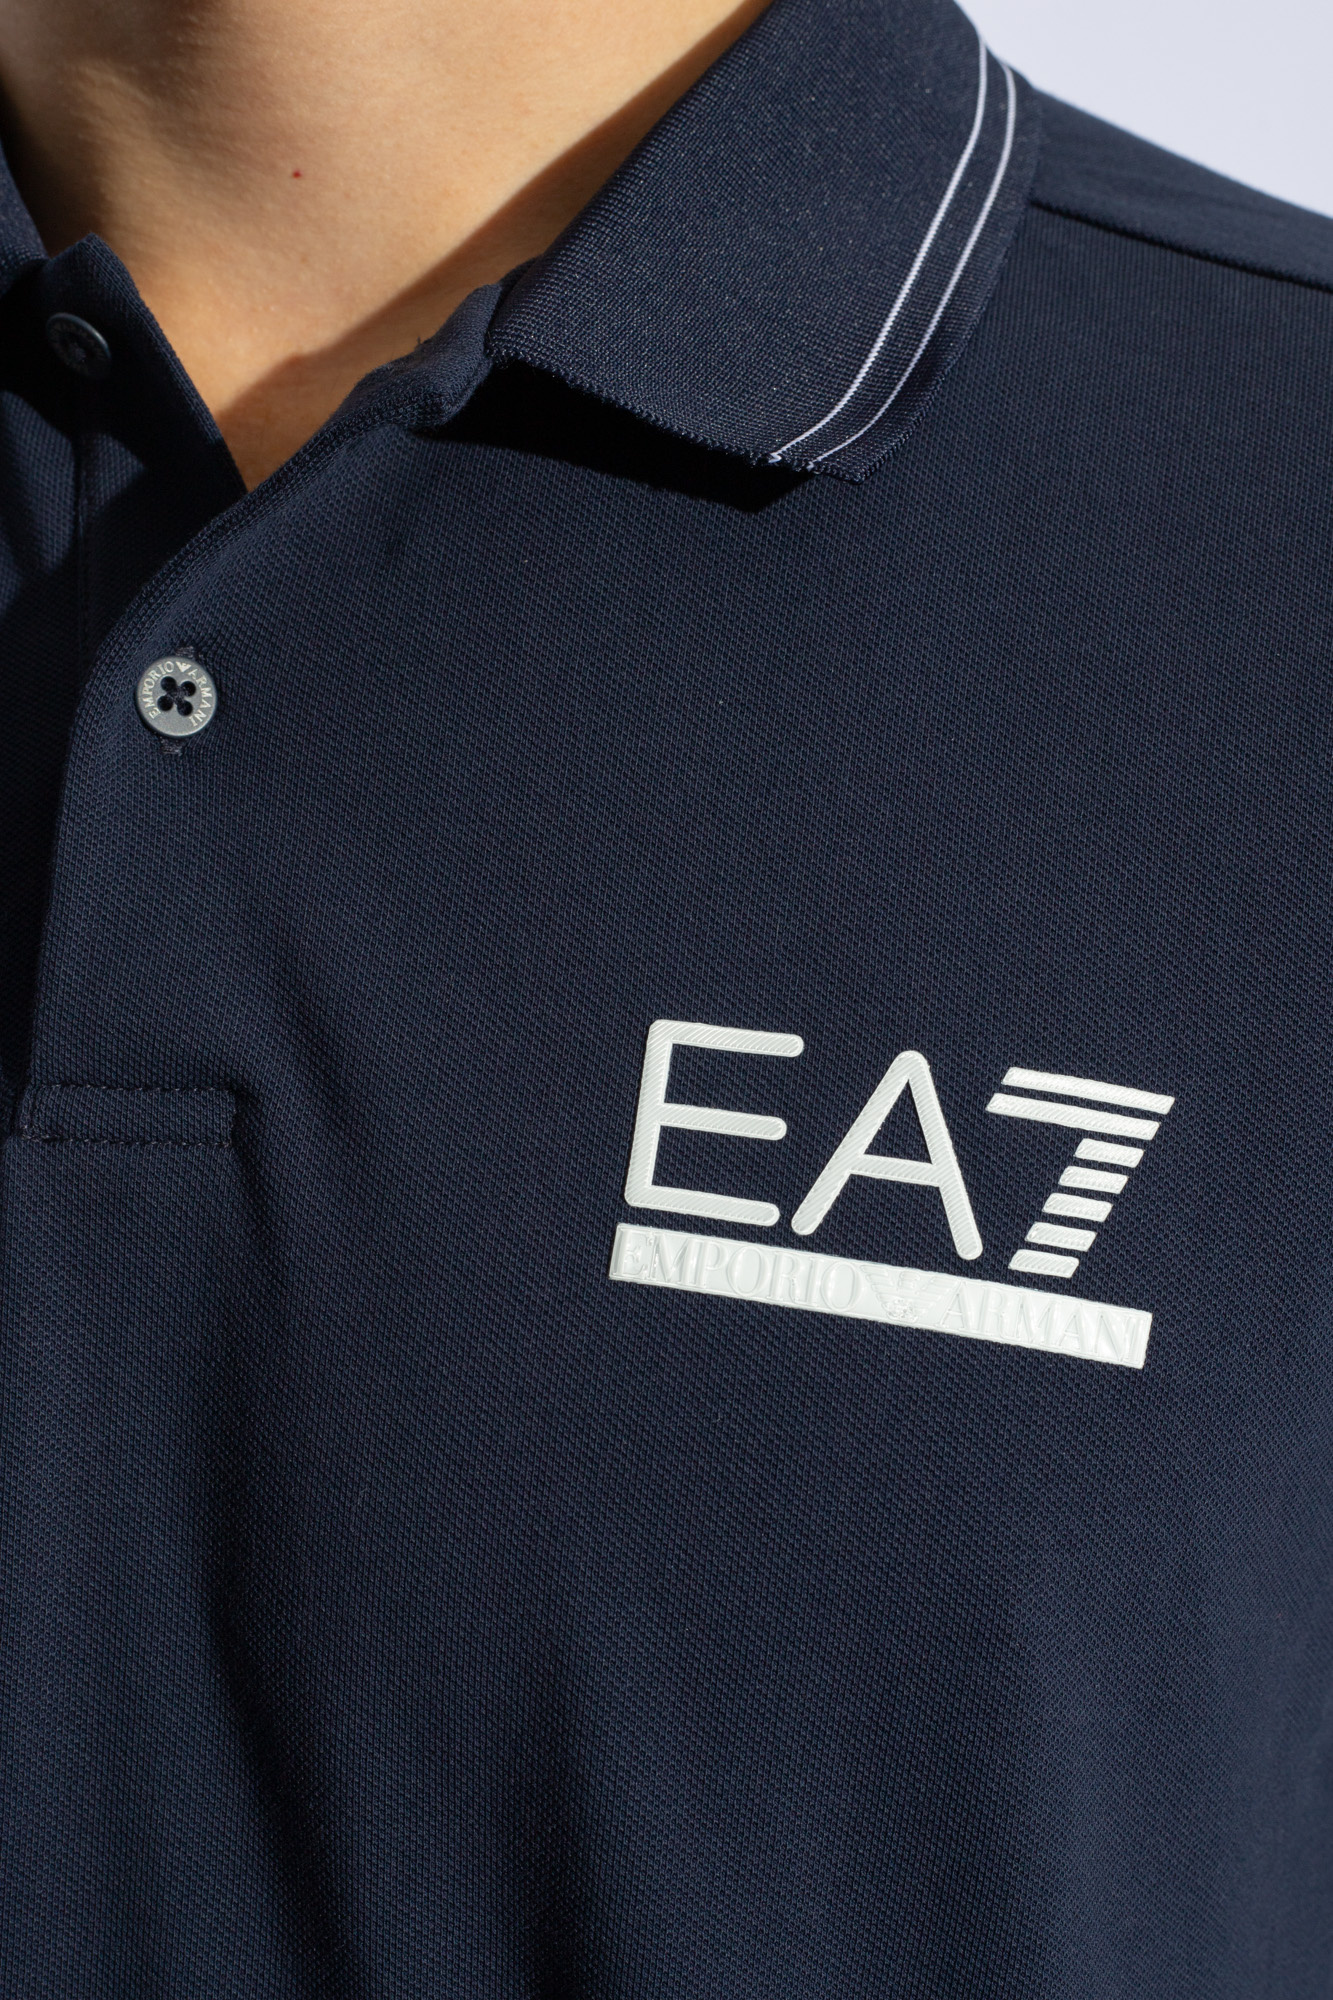 EA7 Emporio Armani wallets suitcases pens polo-shirts accessories